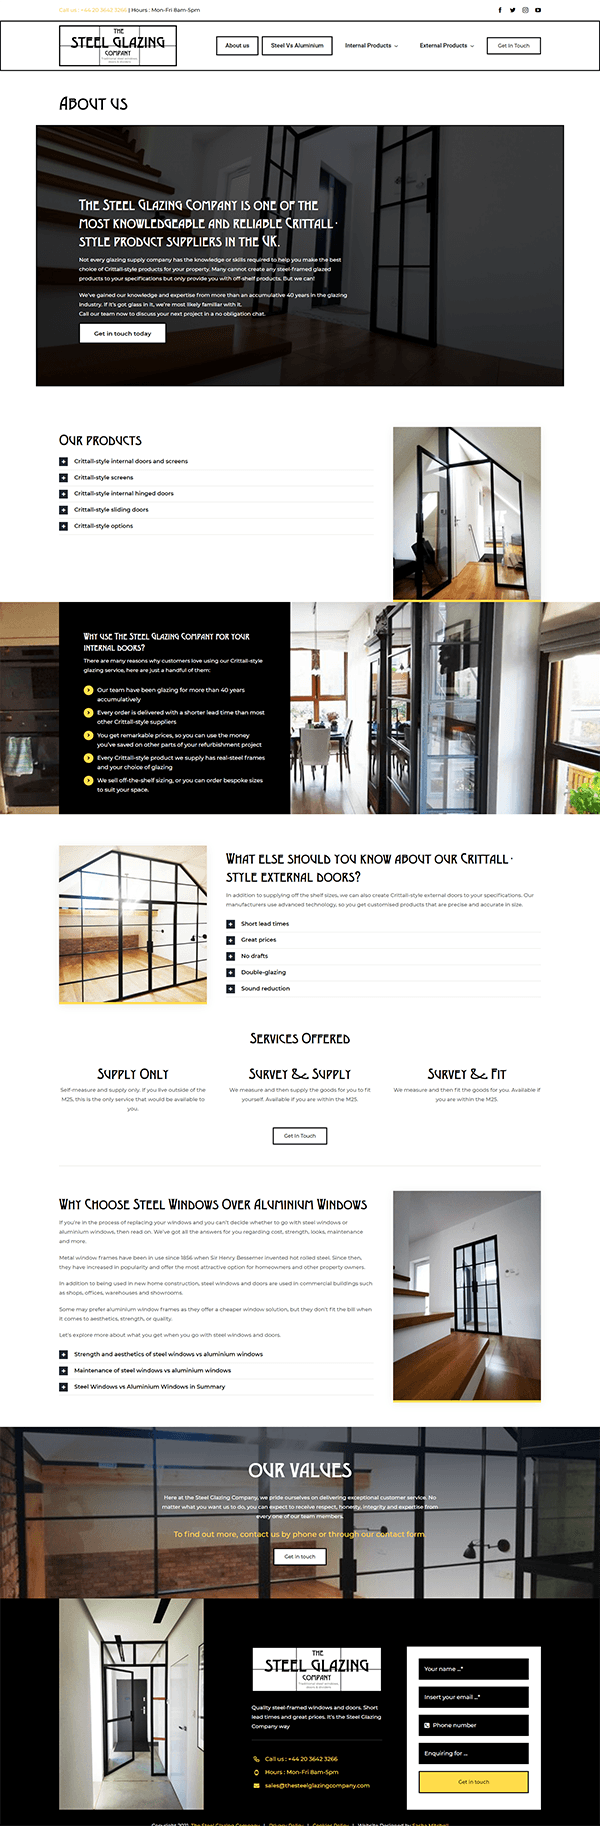 The Steel Glazing Company Website